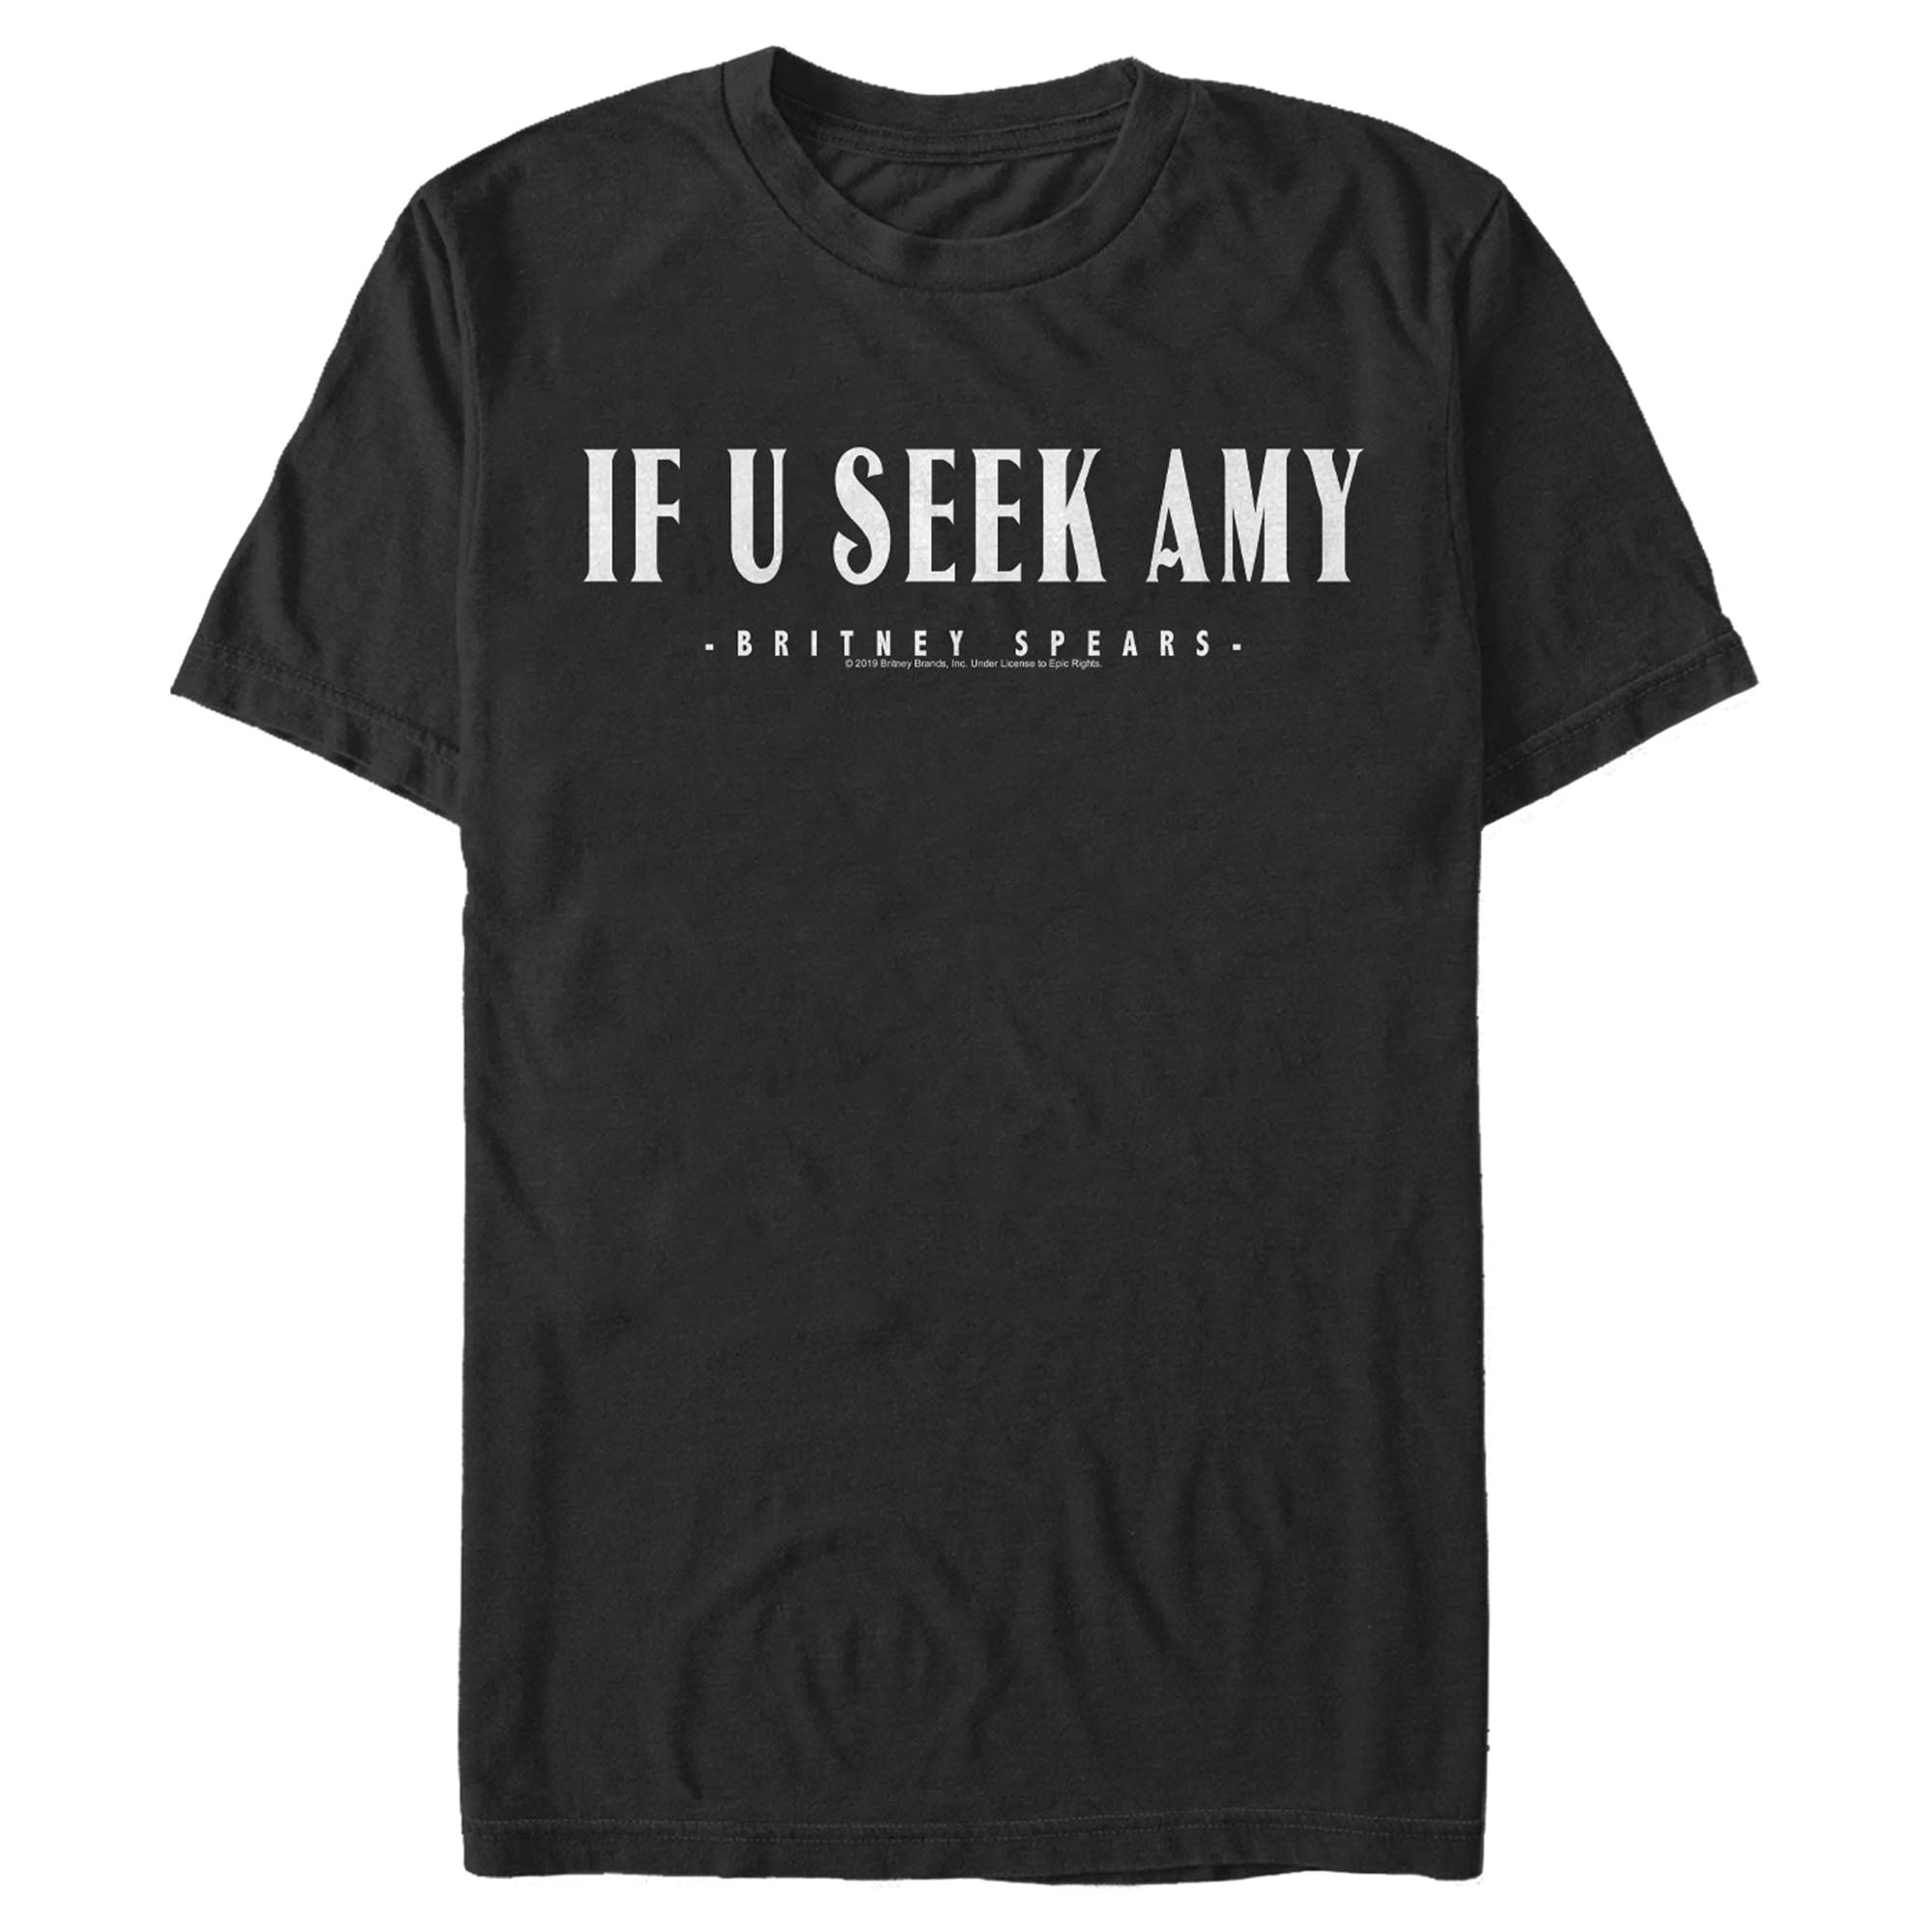 You amy if seek